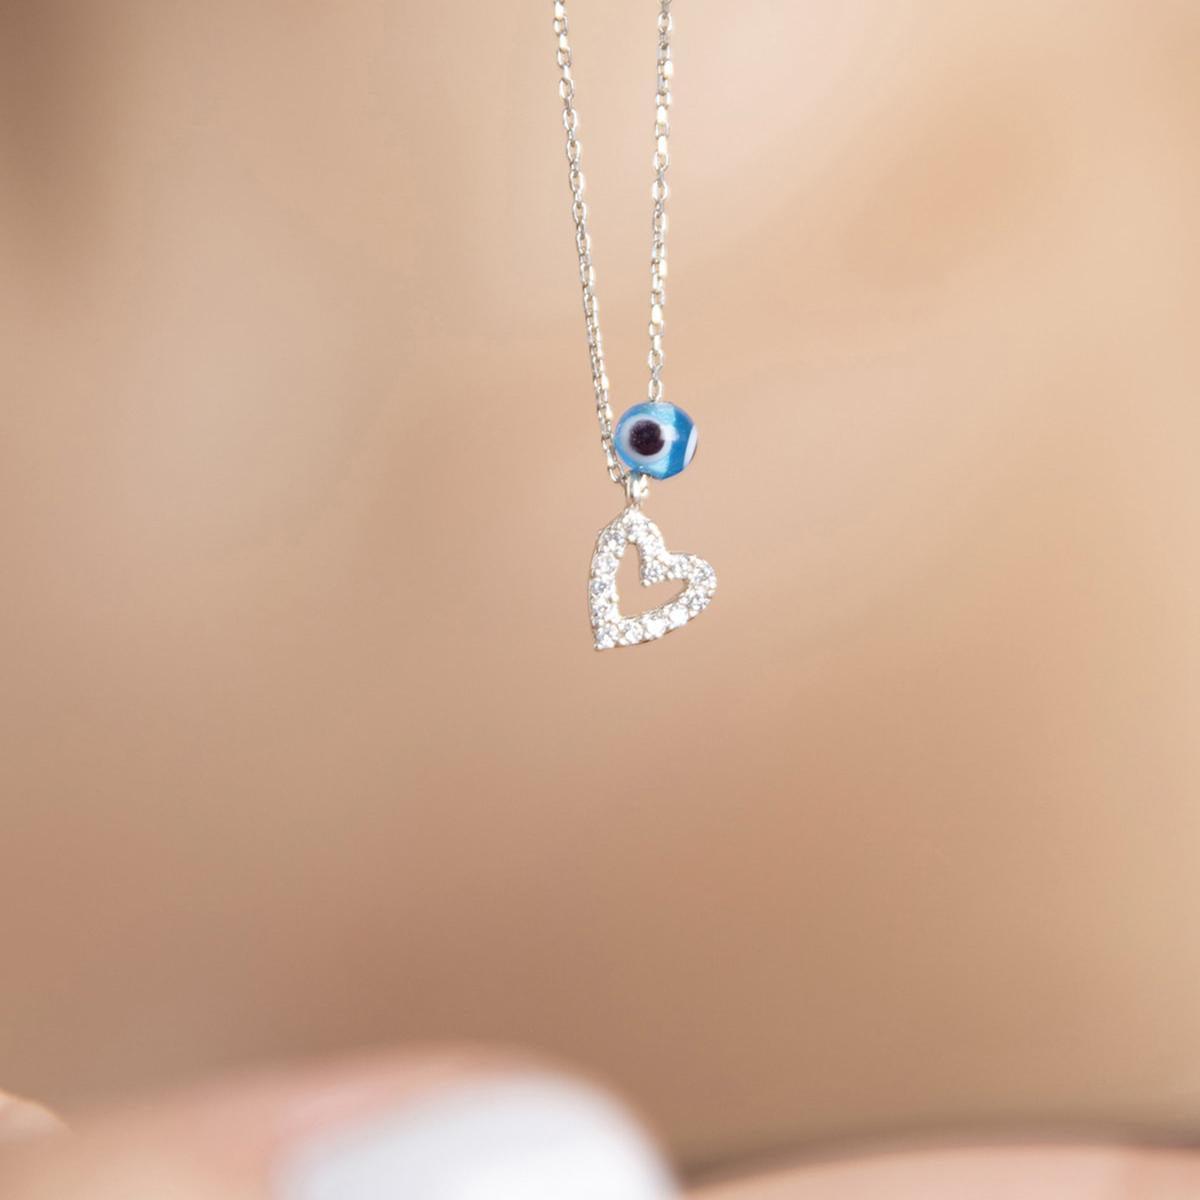 Diamond Heart Necklace • Tiny Heart Necklace • Tiny Eye Evil Necklace - Trending Silver Gifts